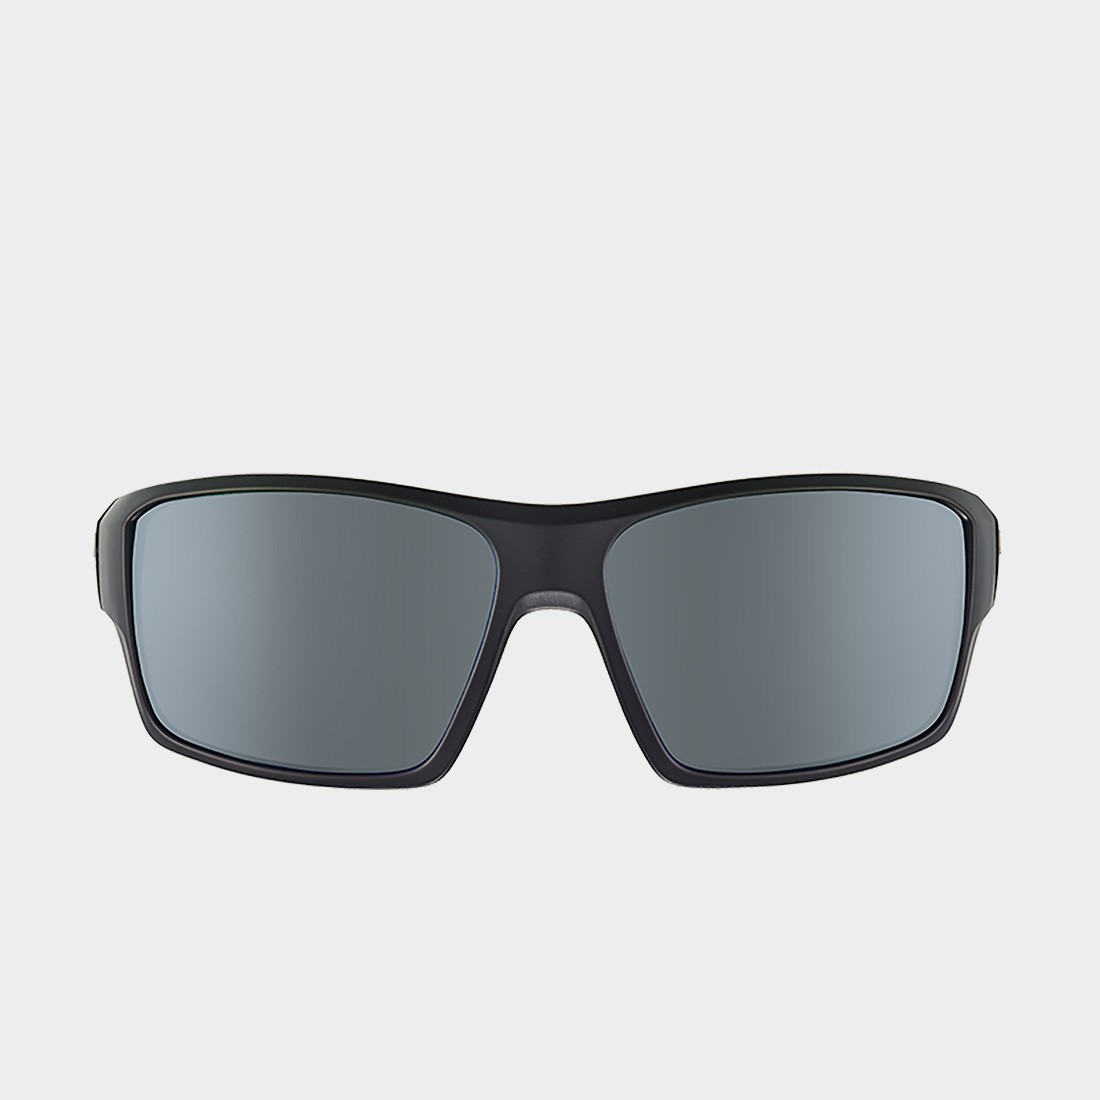 cebe-strickland-sport-glasses-large-black